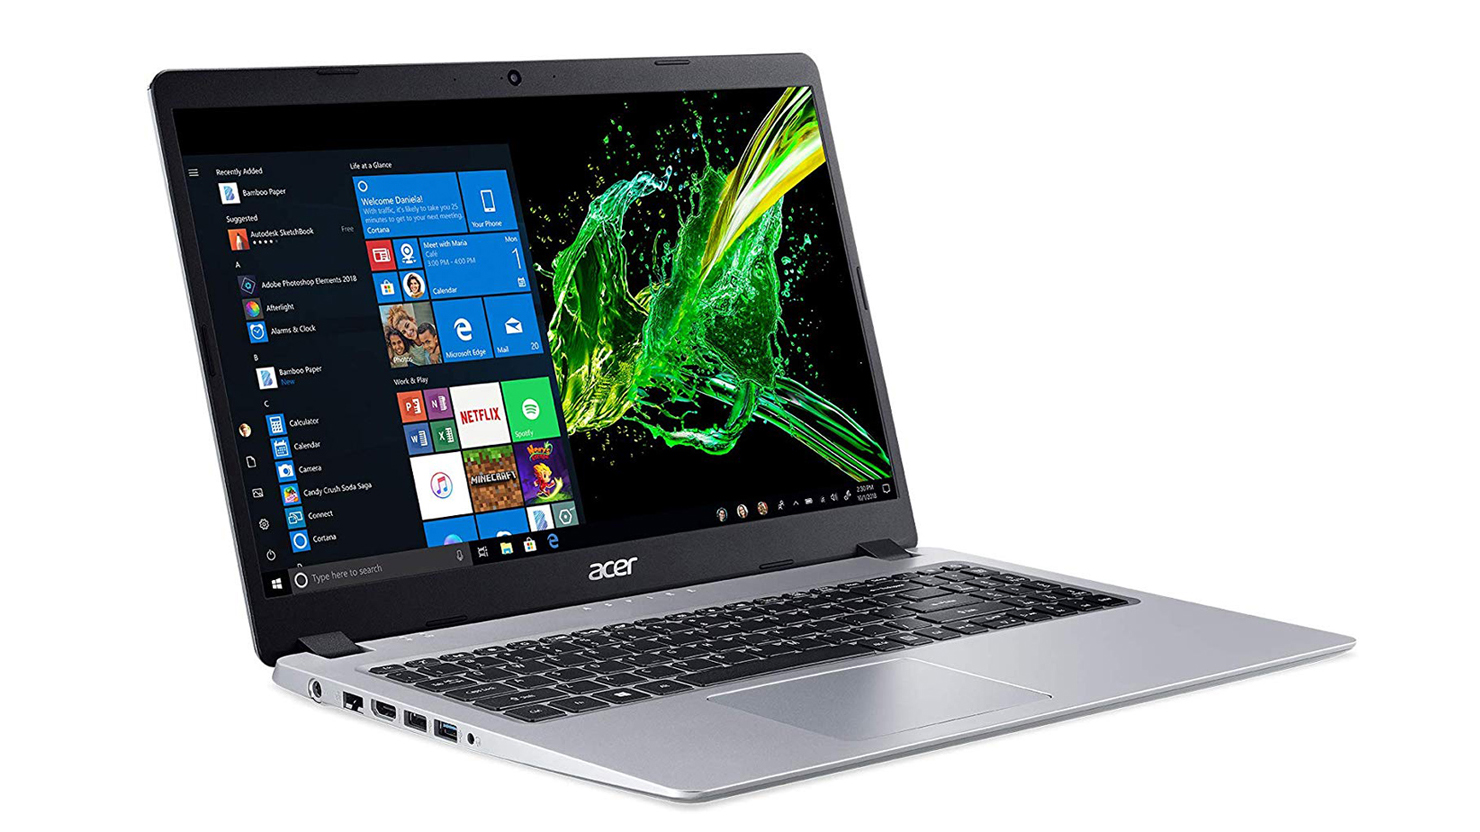 Black Friday laptop deals galore at Currys PC World , DigiTech Geeks